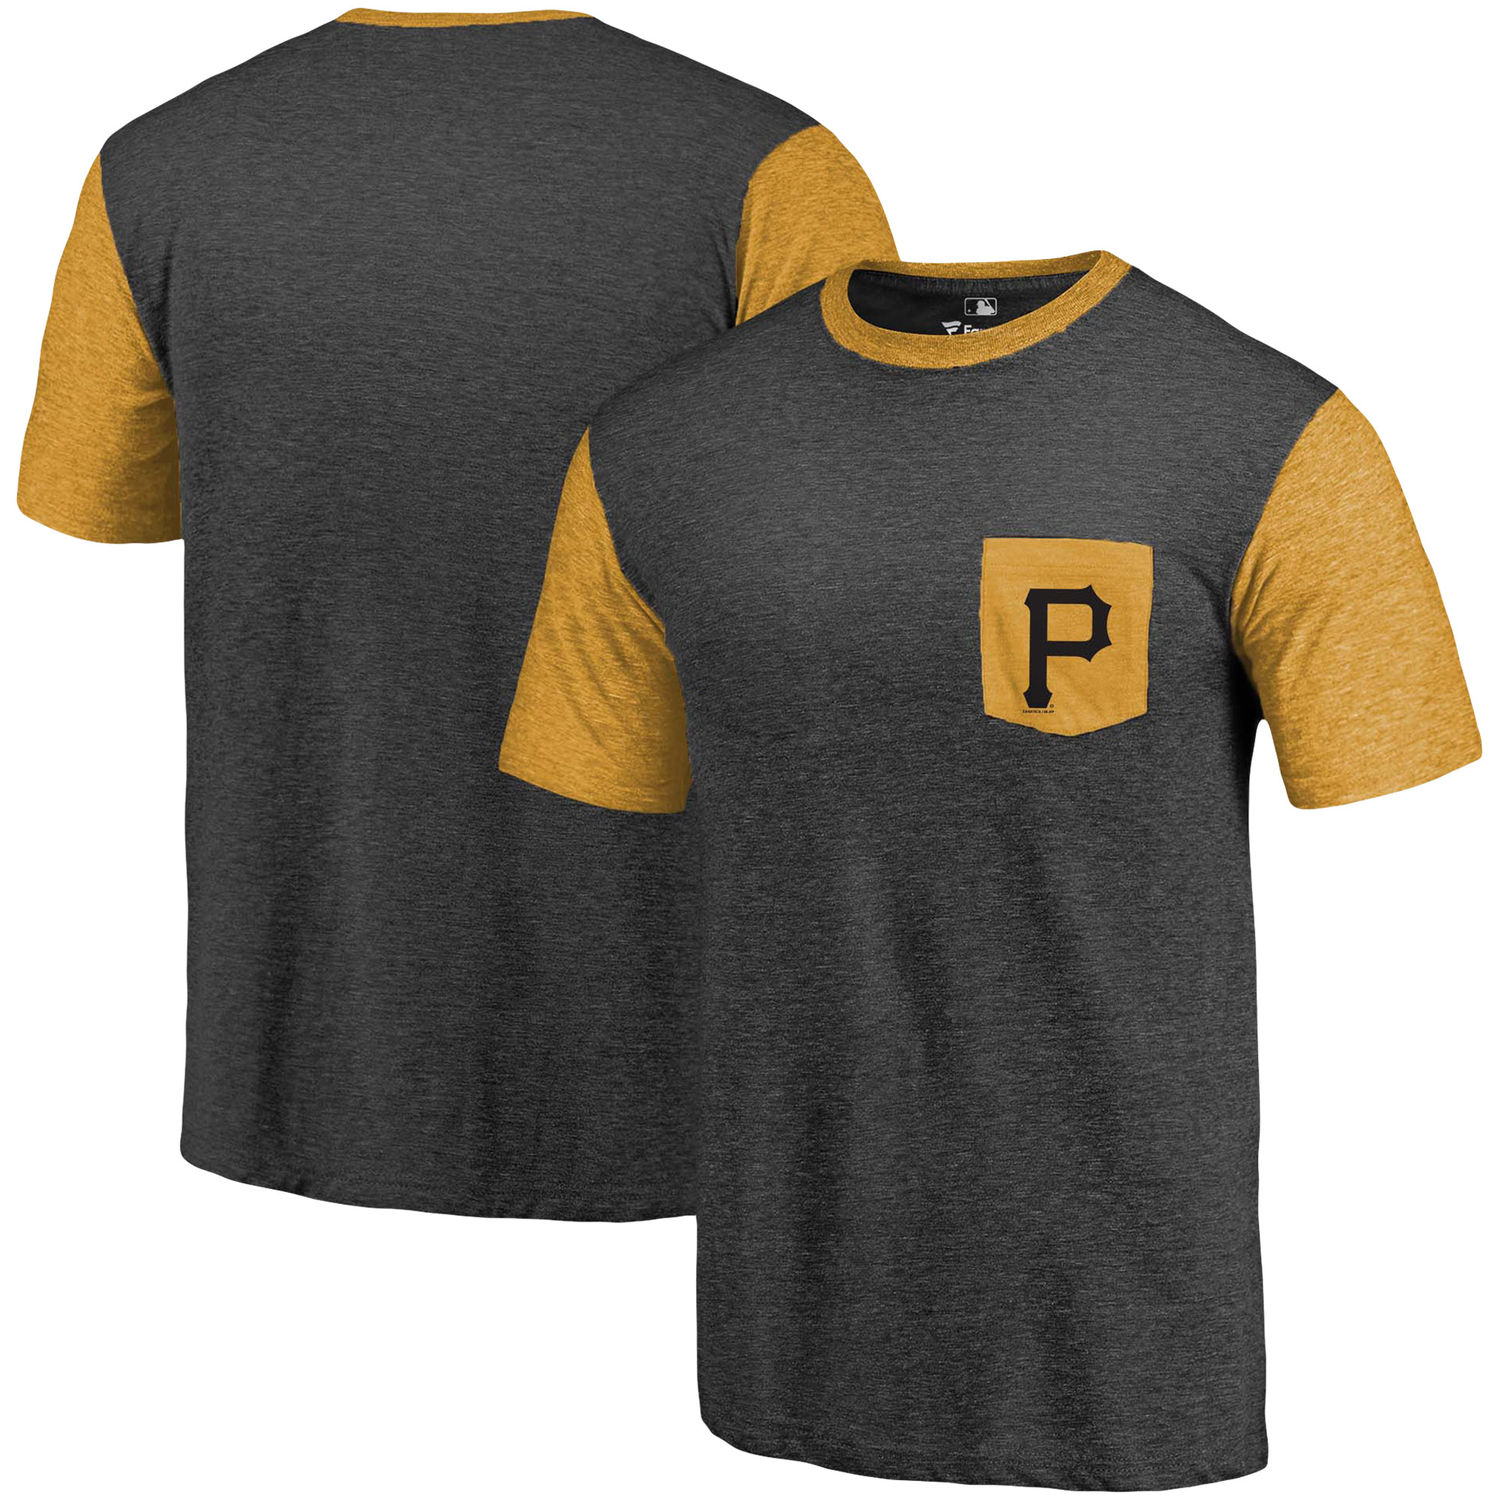 Men's Pittsburgh Pirates Fanatics Branded Black-Gold Refresh Pocket T-Shirt